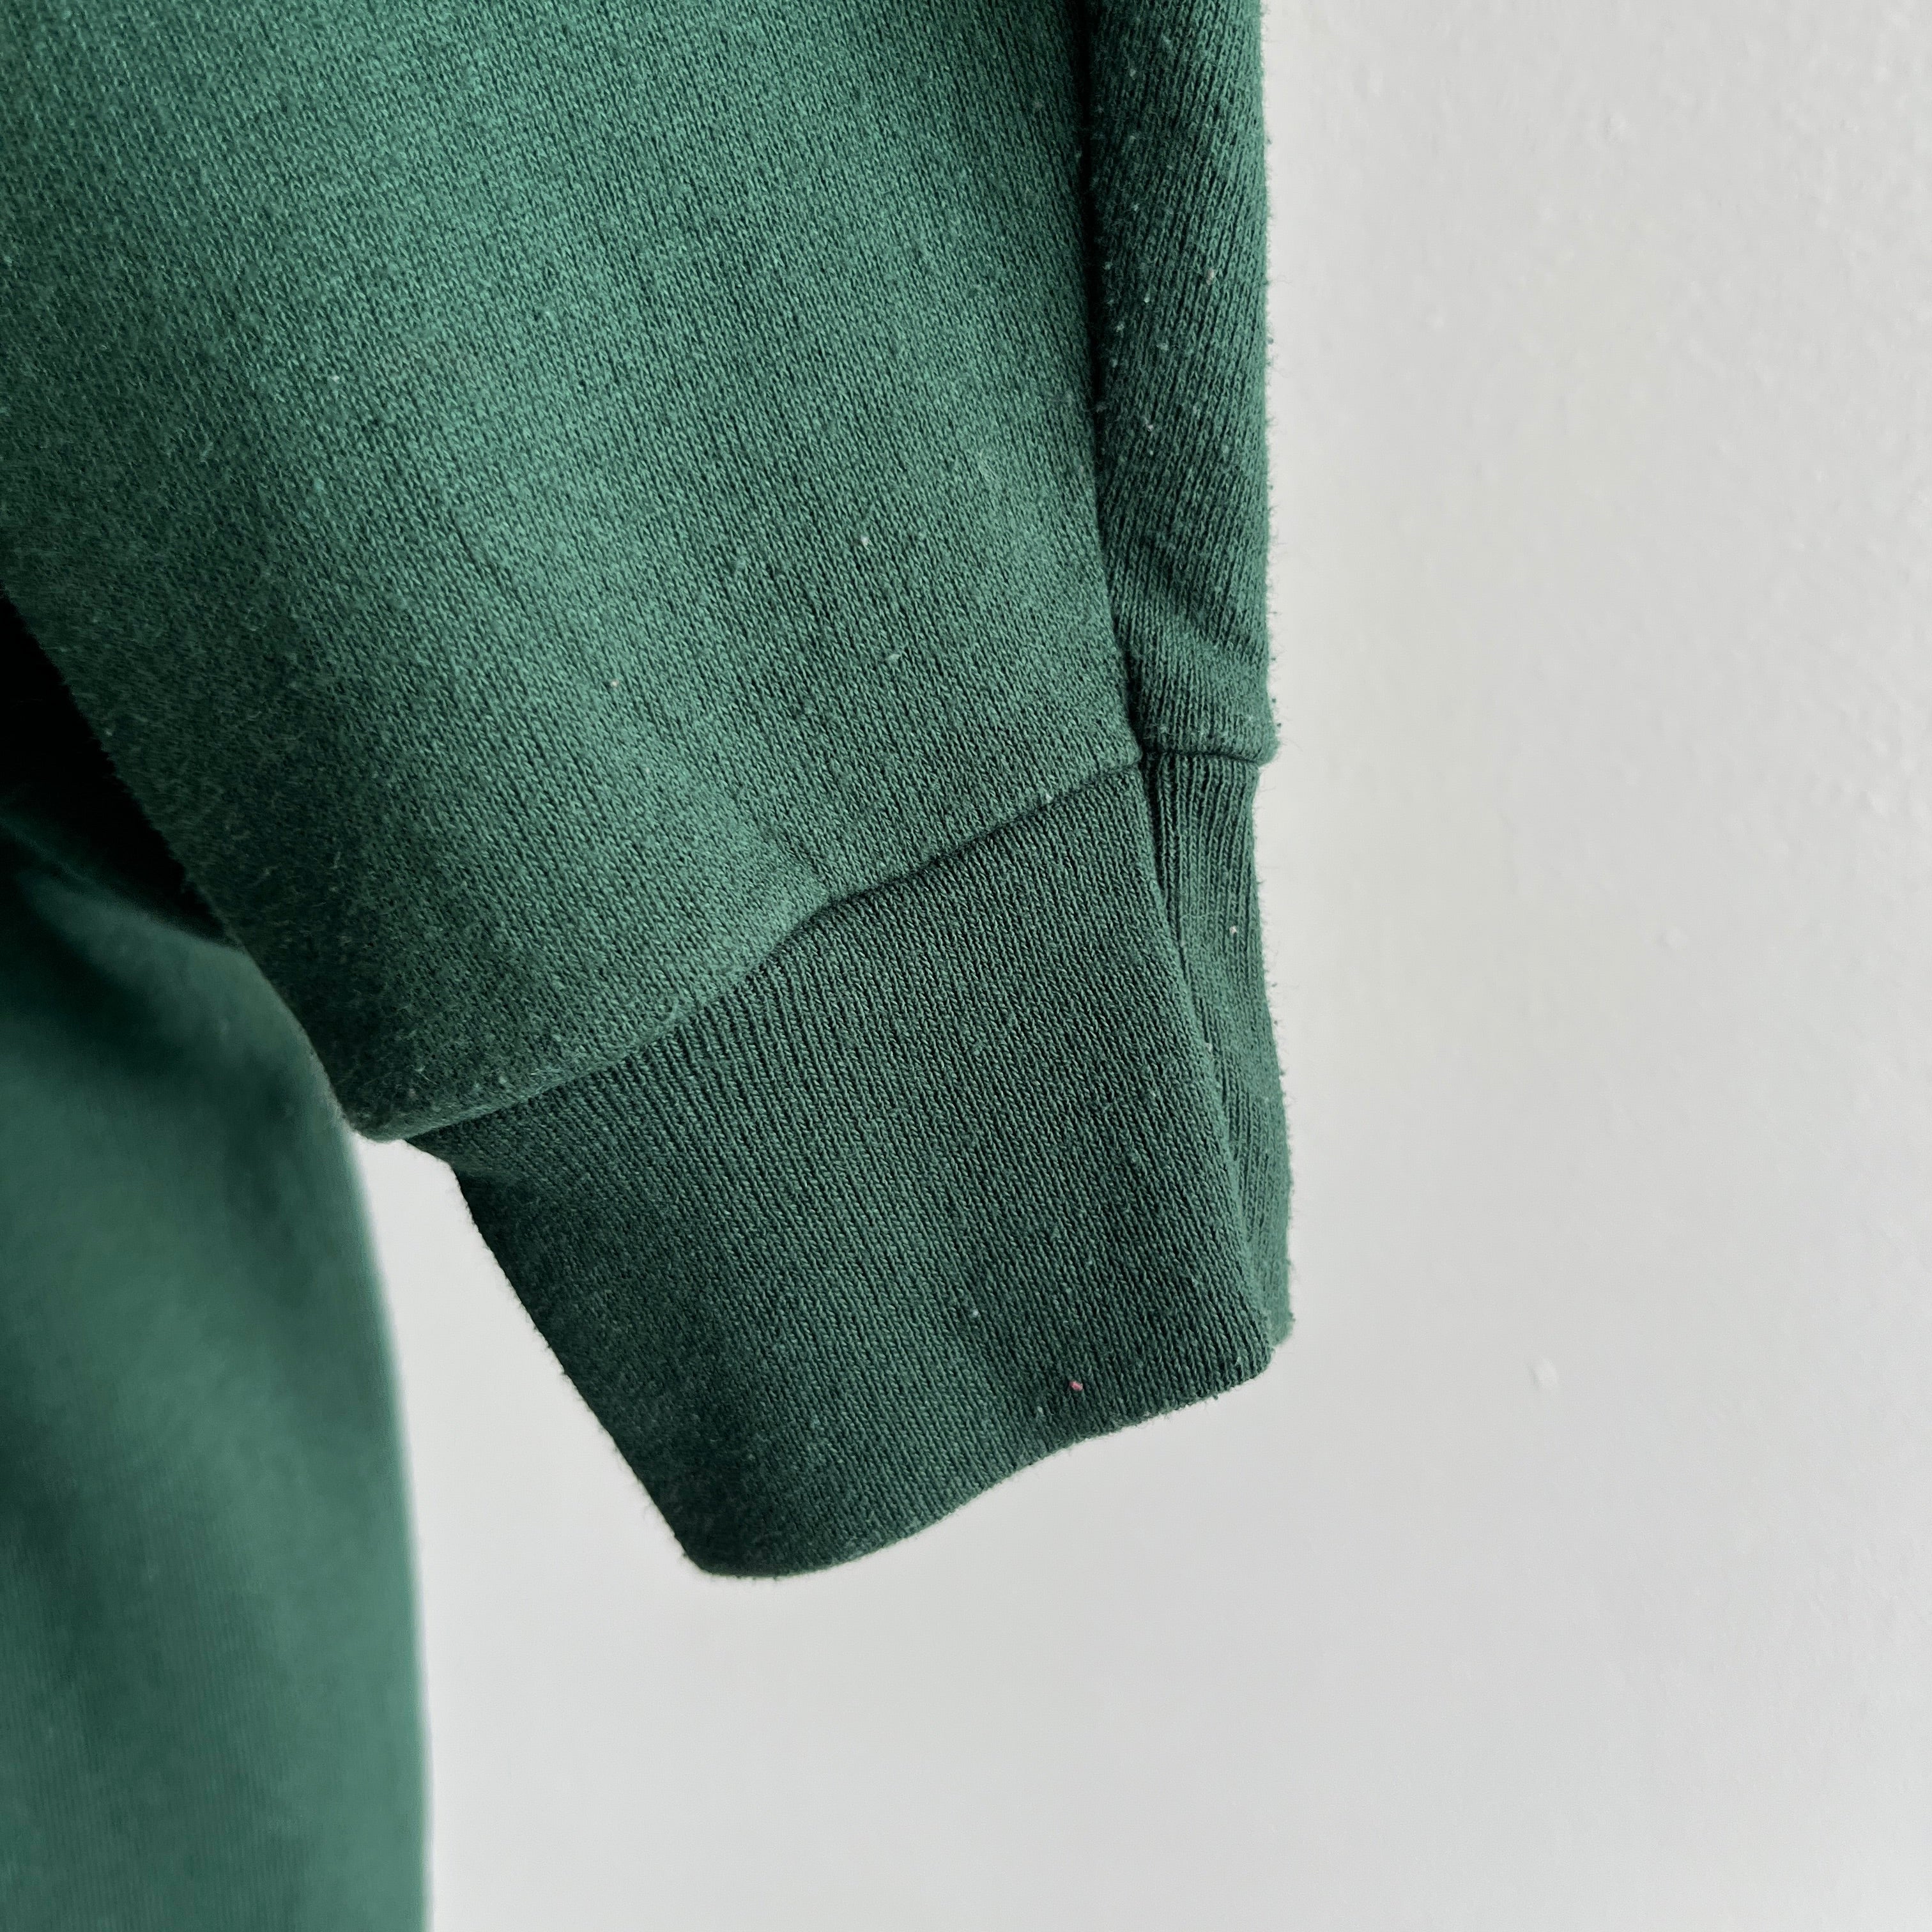 1990s Dark Green Tultex Sweatshirt - An American Made Good One